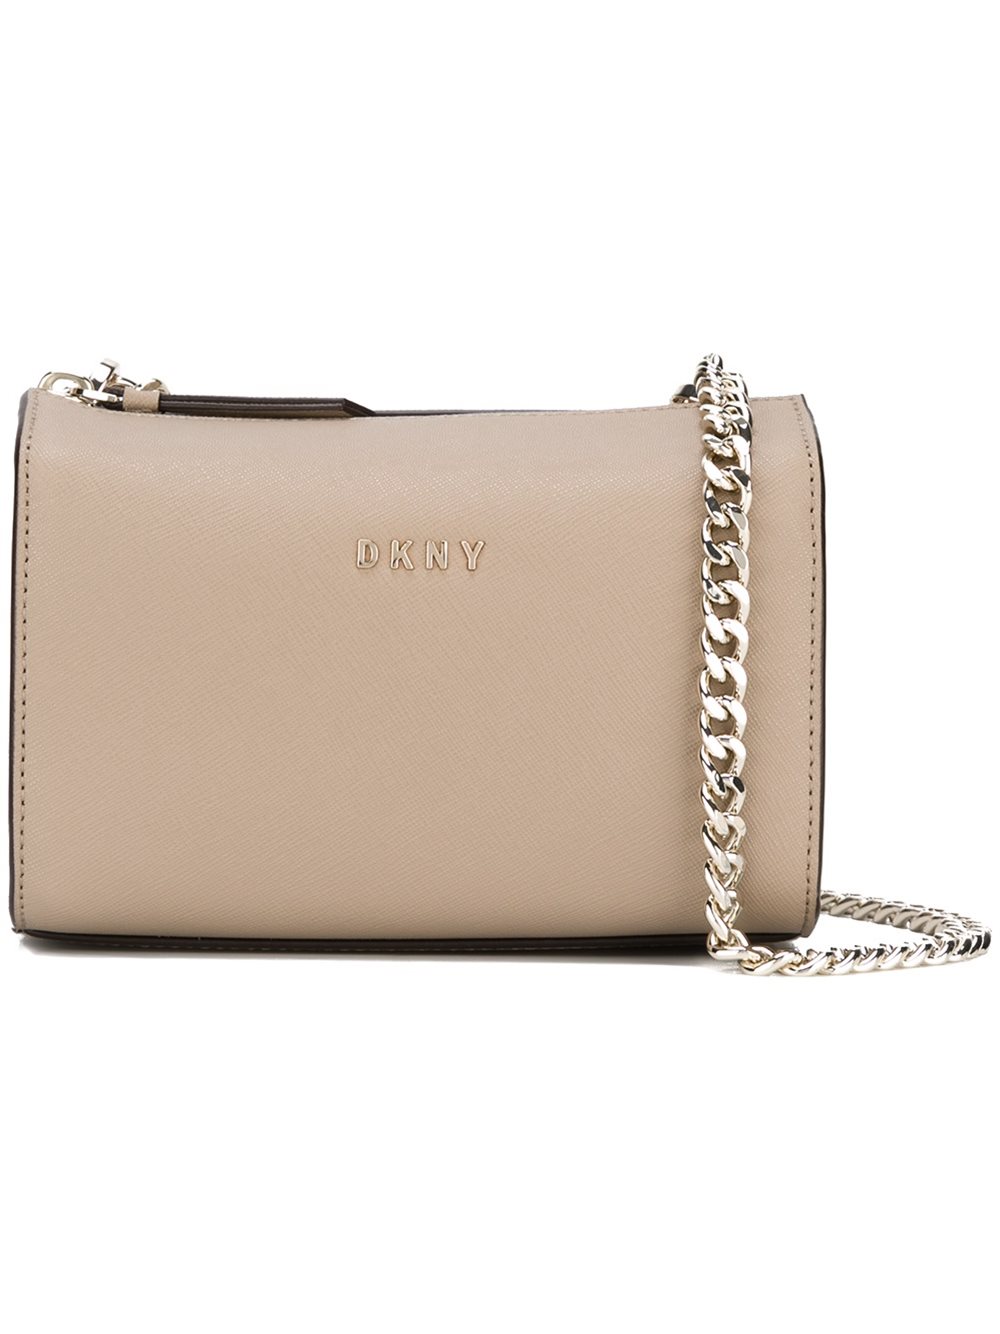 DKNY chain strap crossbody bag 104 Women Bags Satchels & Cross Body,dkny  bags buy online,Top Brand Wholesale Online